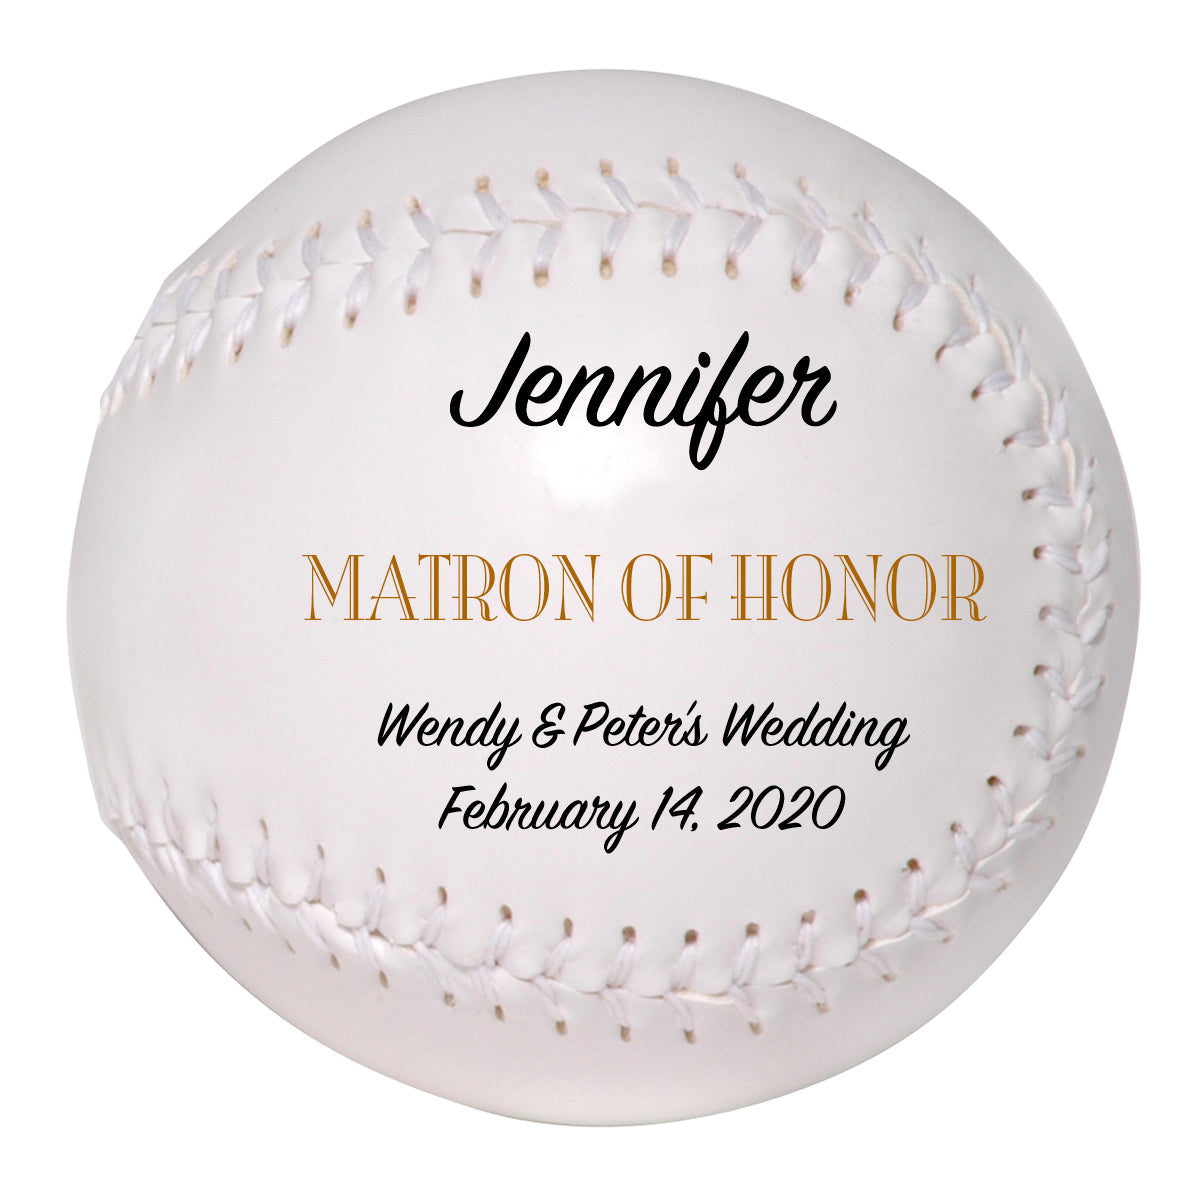 Personalized Wedding Softball Keepsake - Best Man - Ring Bearer - Groomsman Gifts